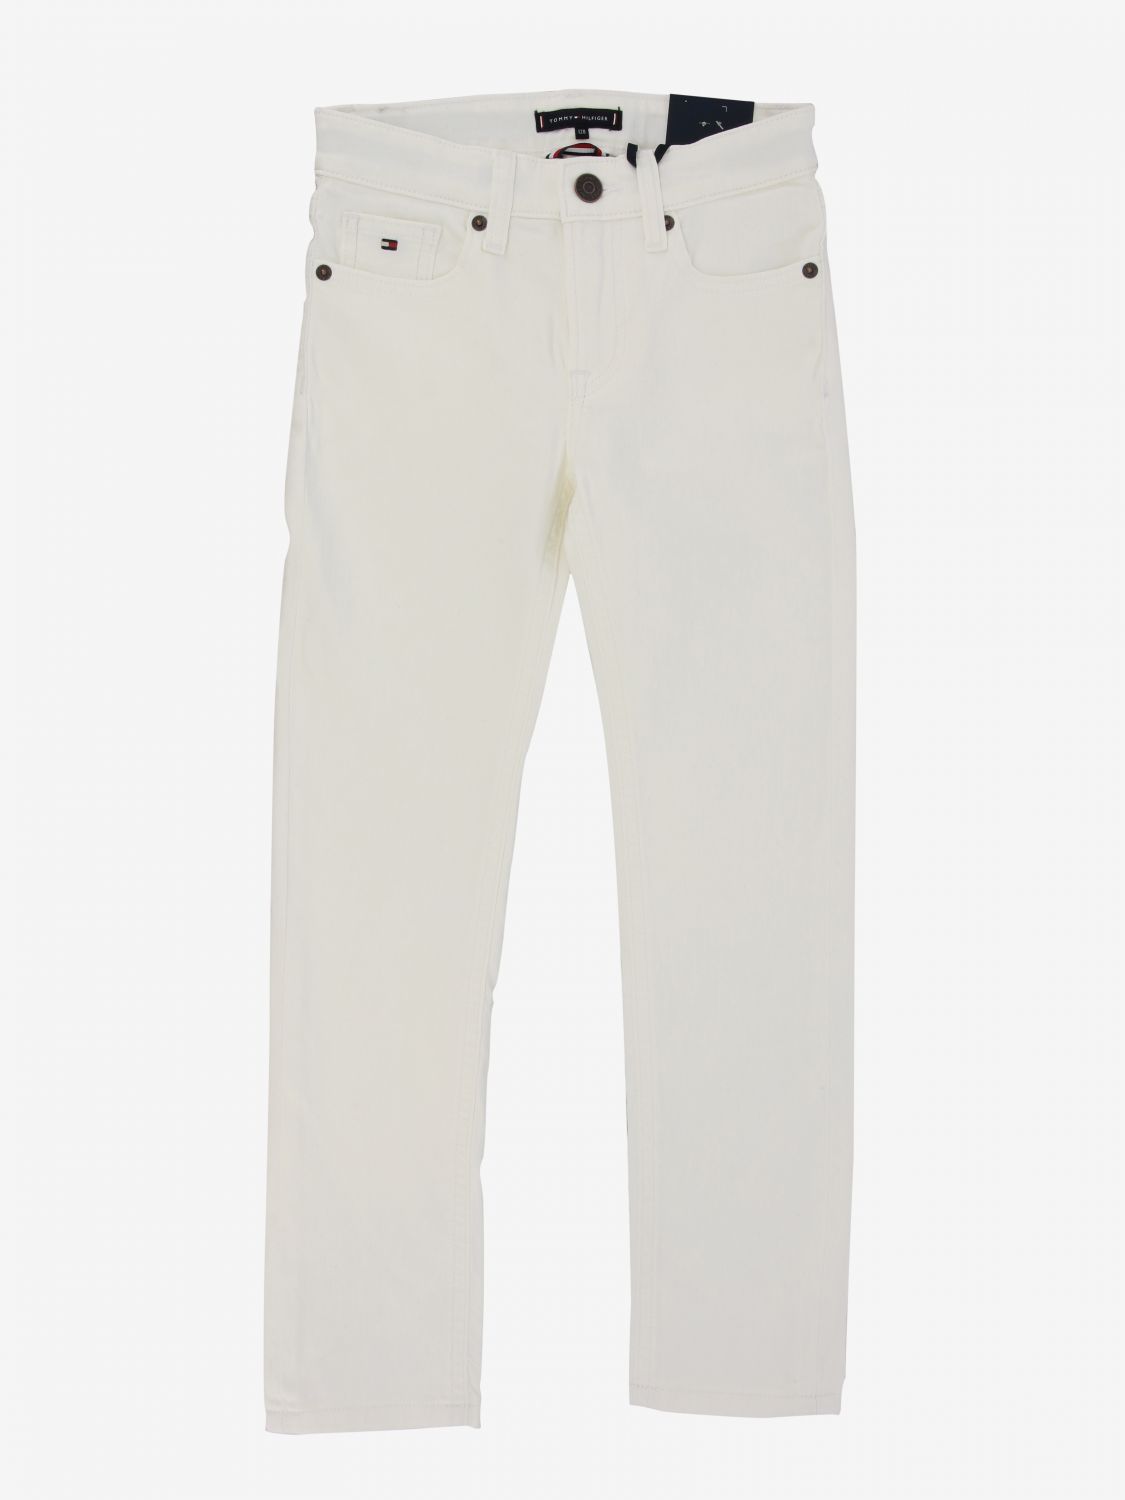 white jeans tommy hilfiger